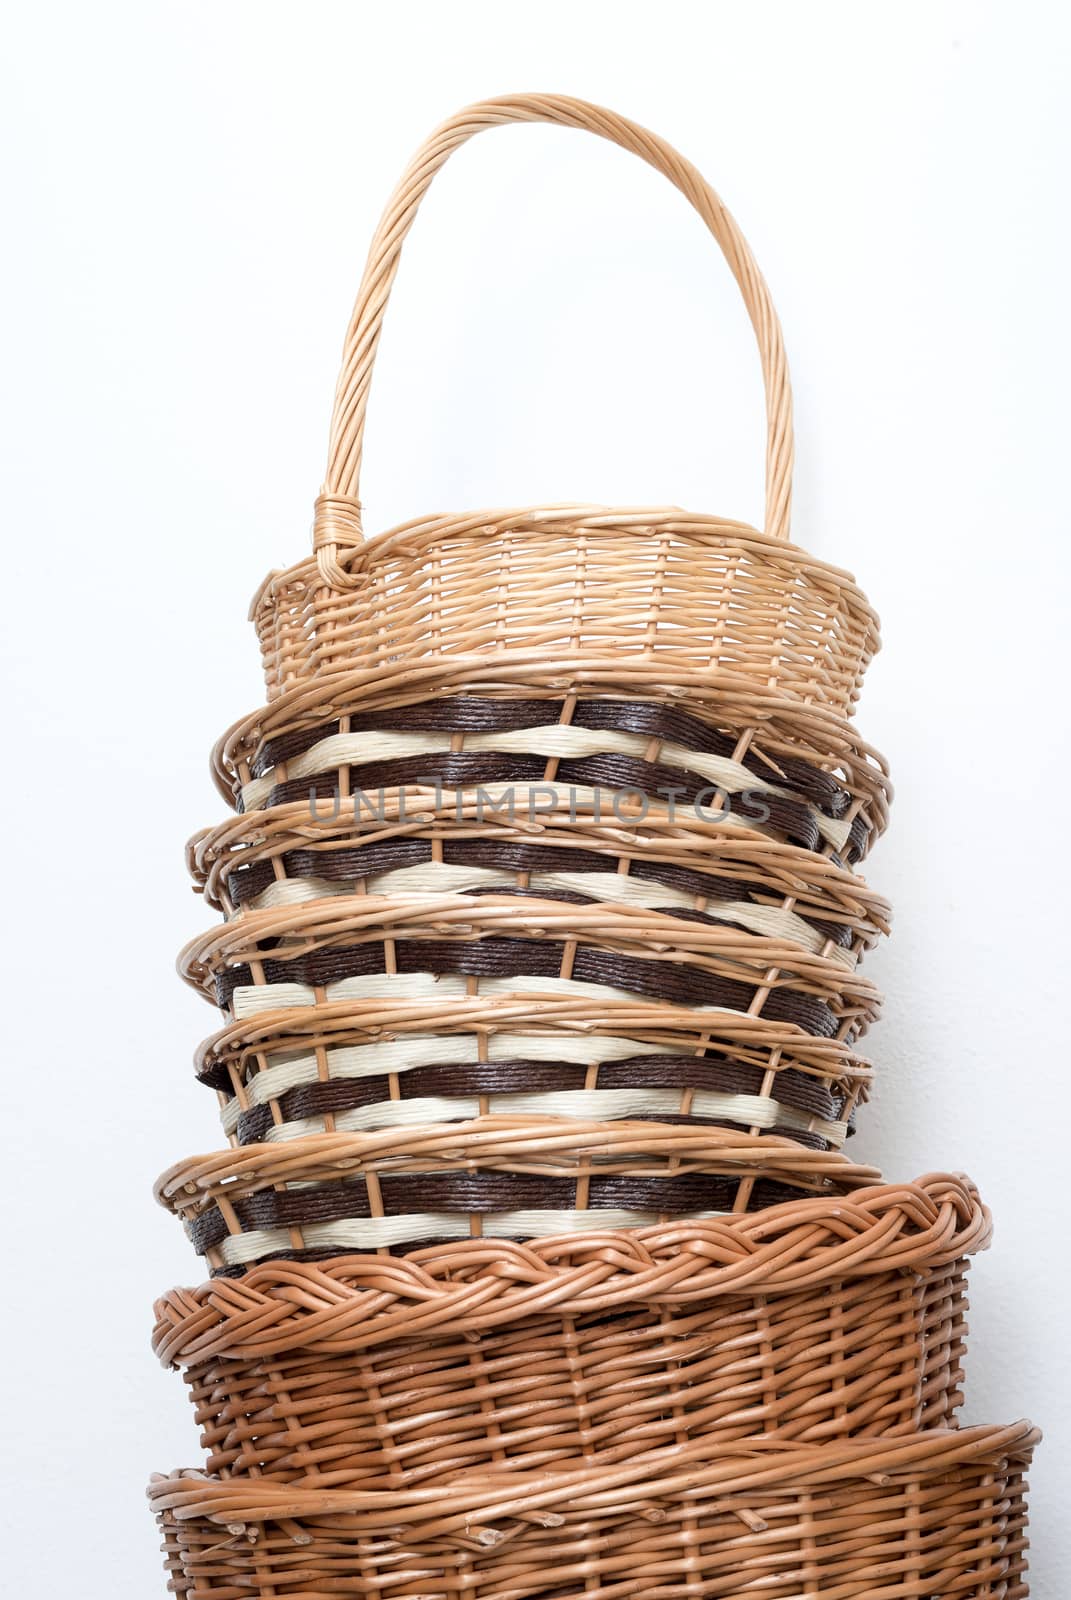 Wicker basket on white background by DNKSTUDIO